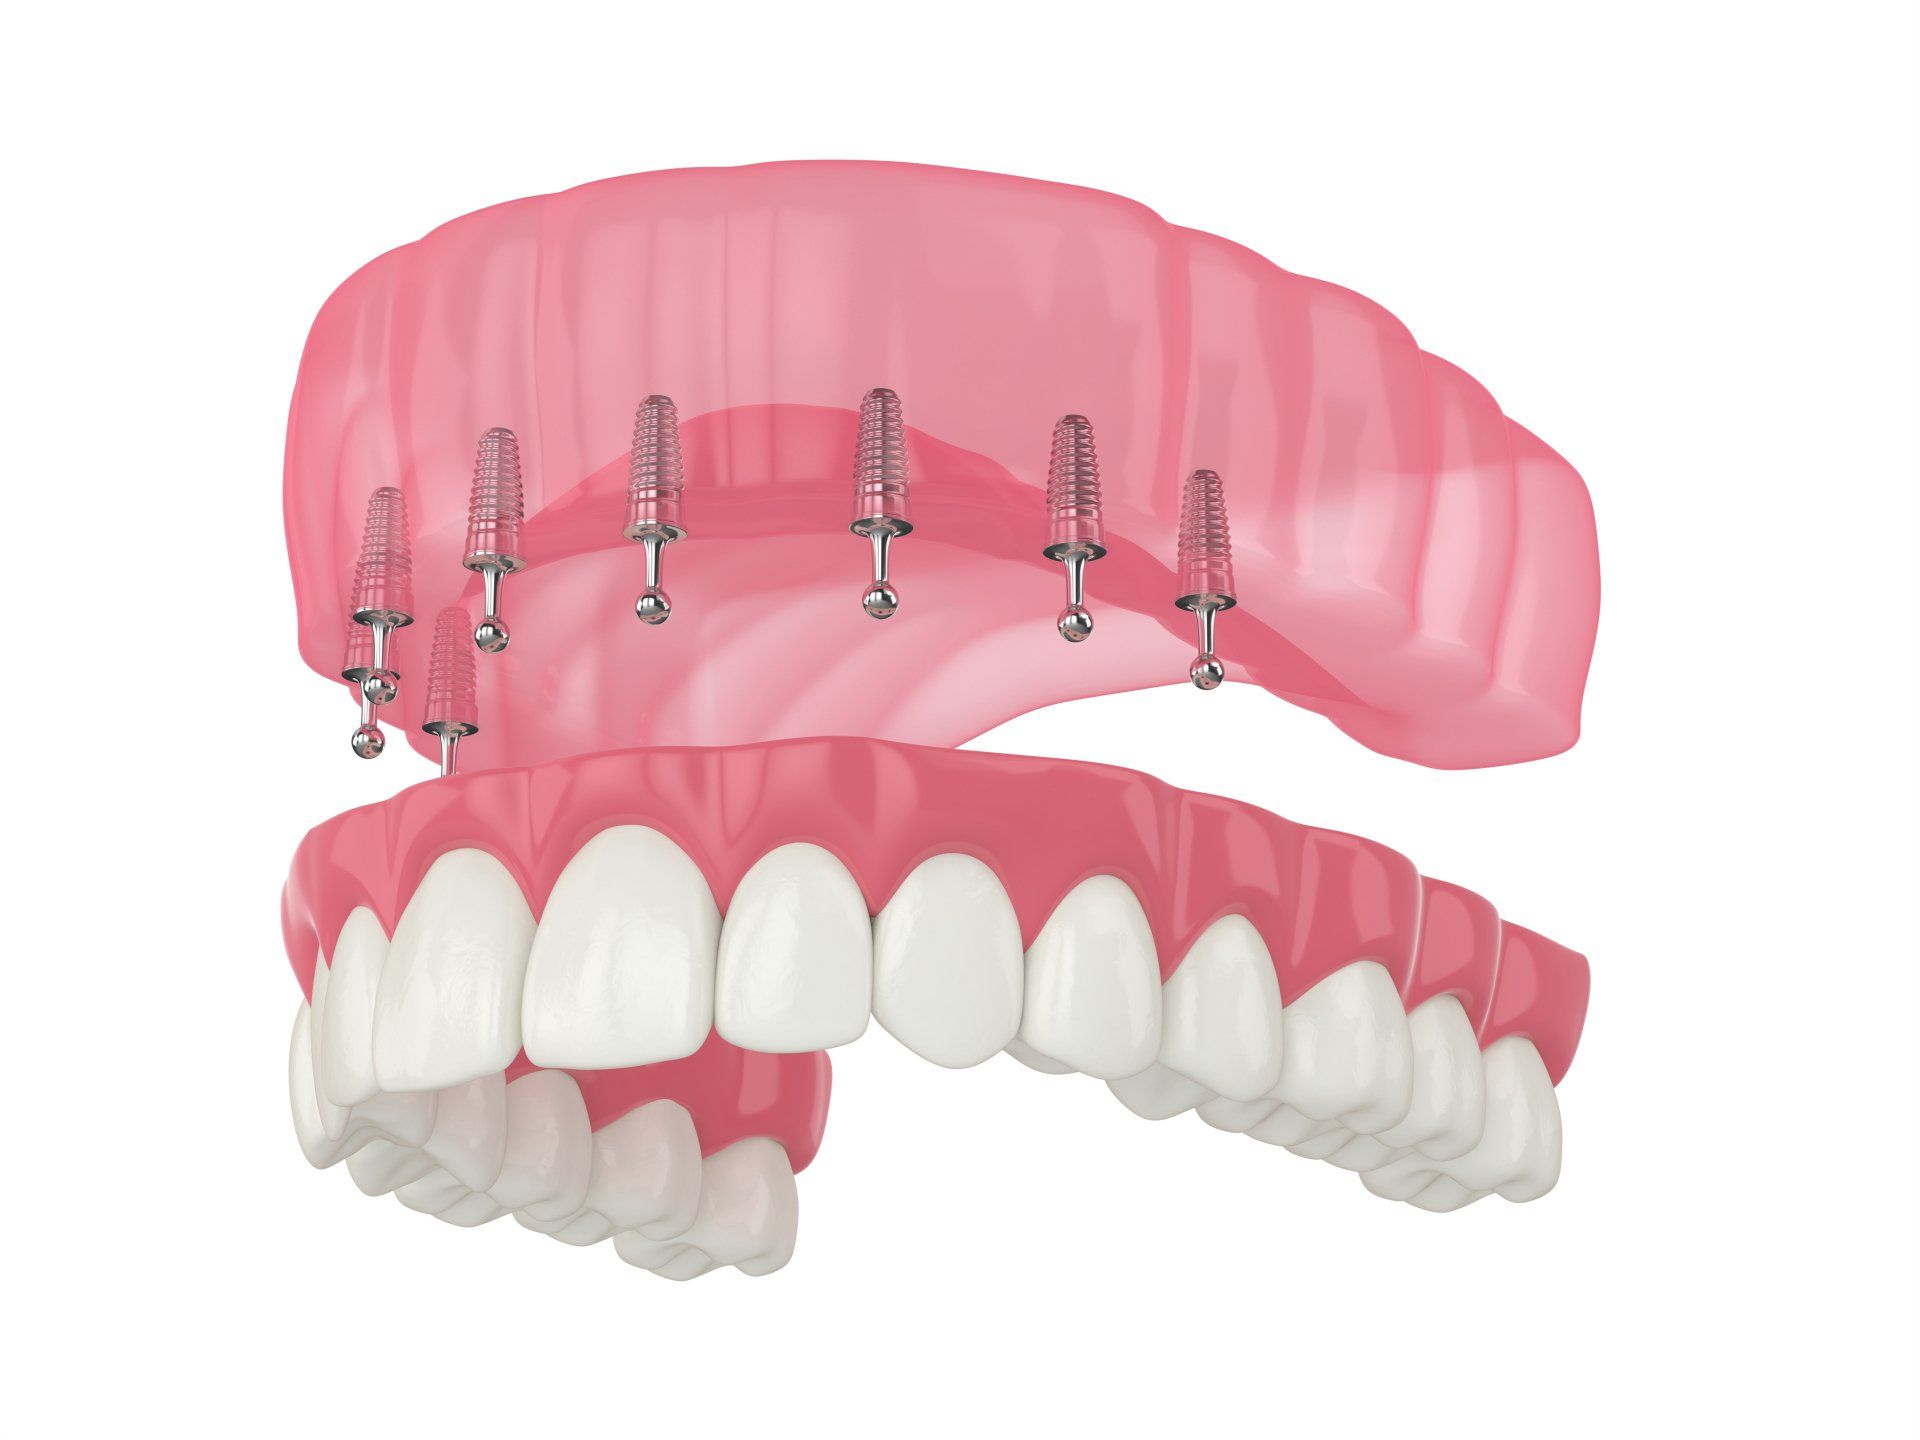 All-on-6 dental implants